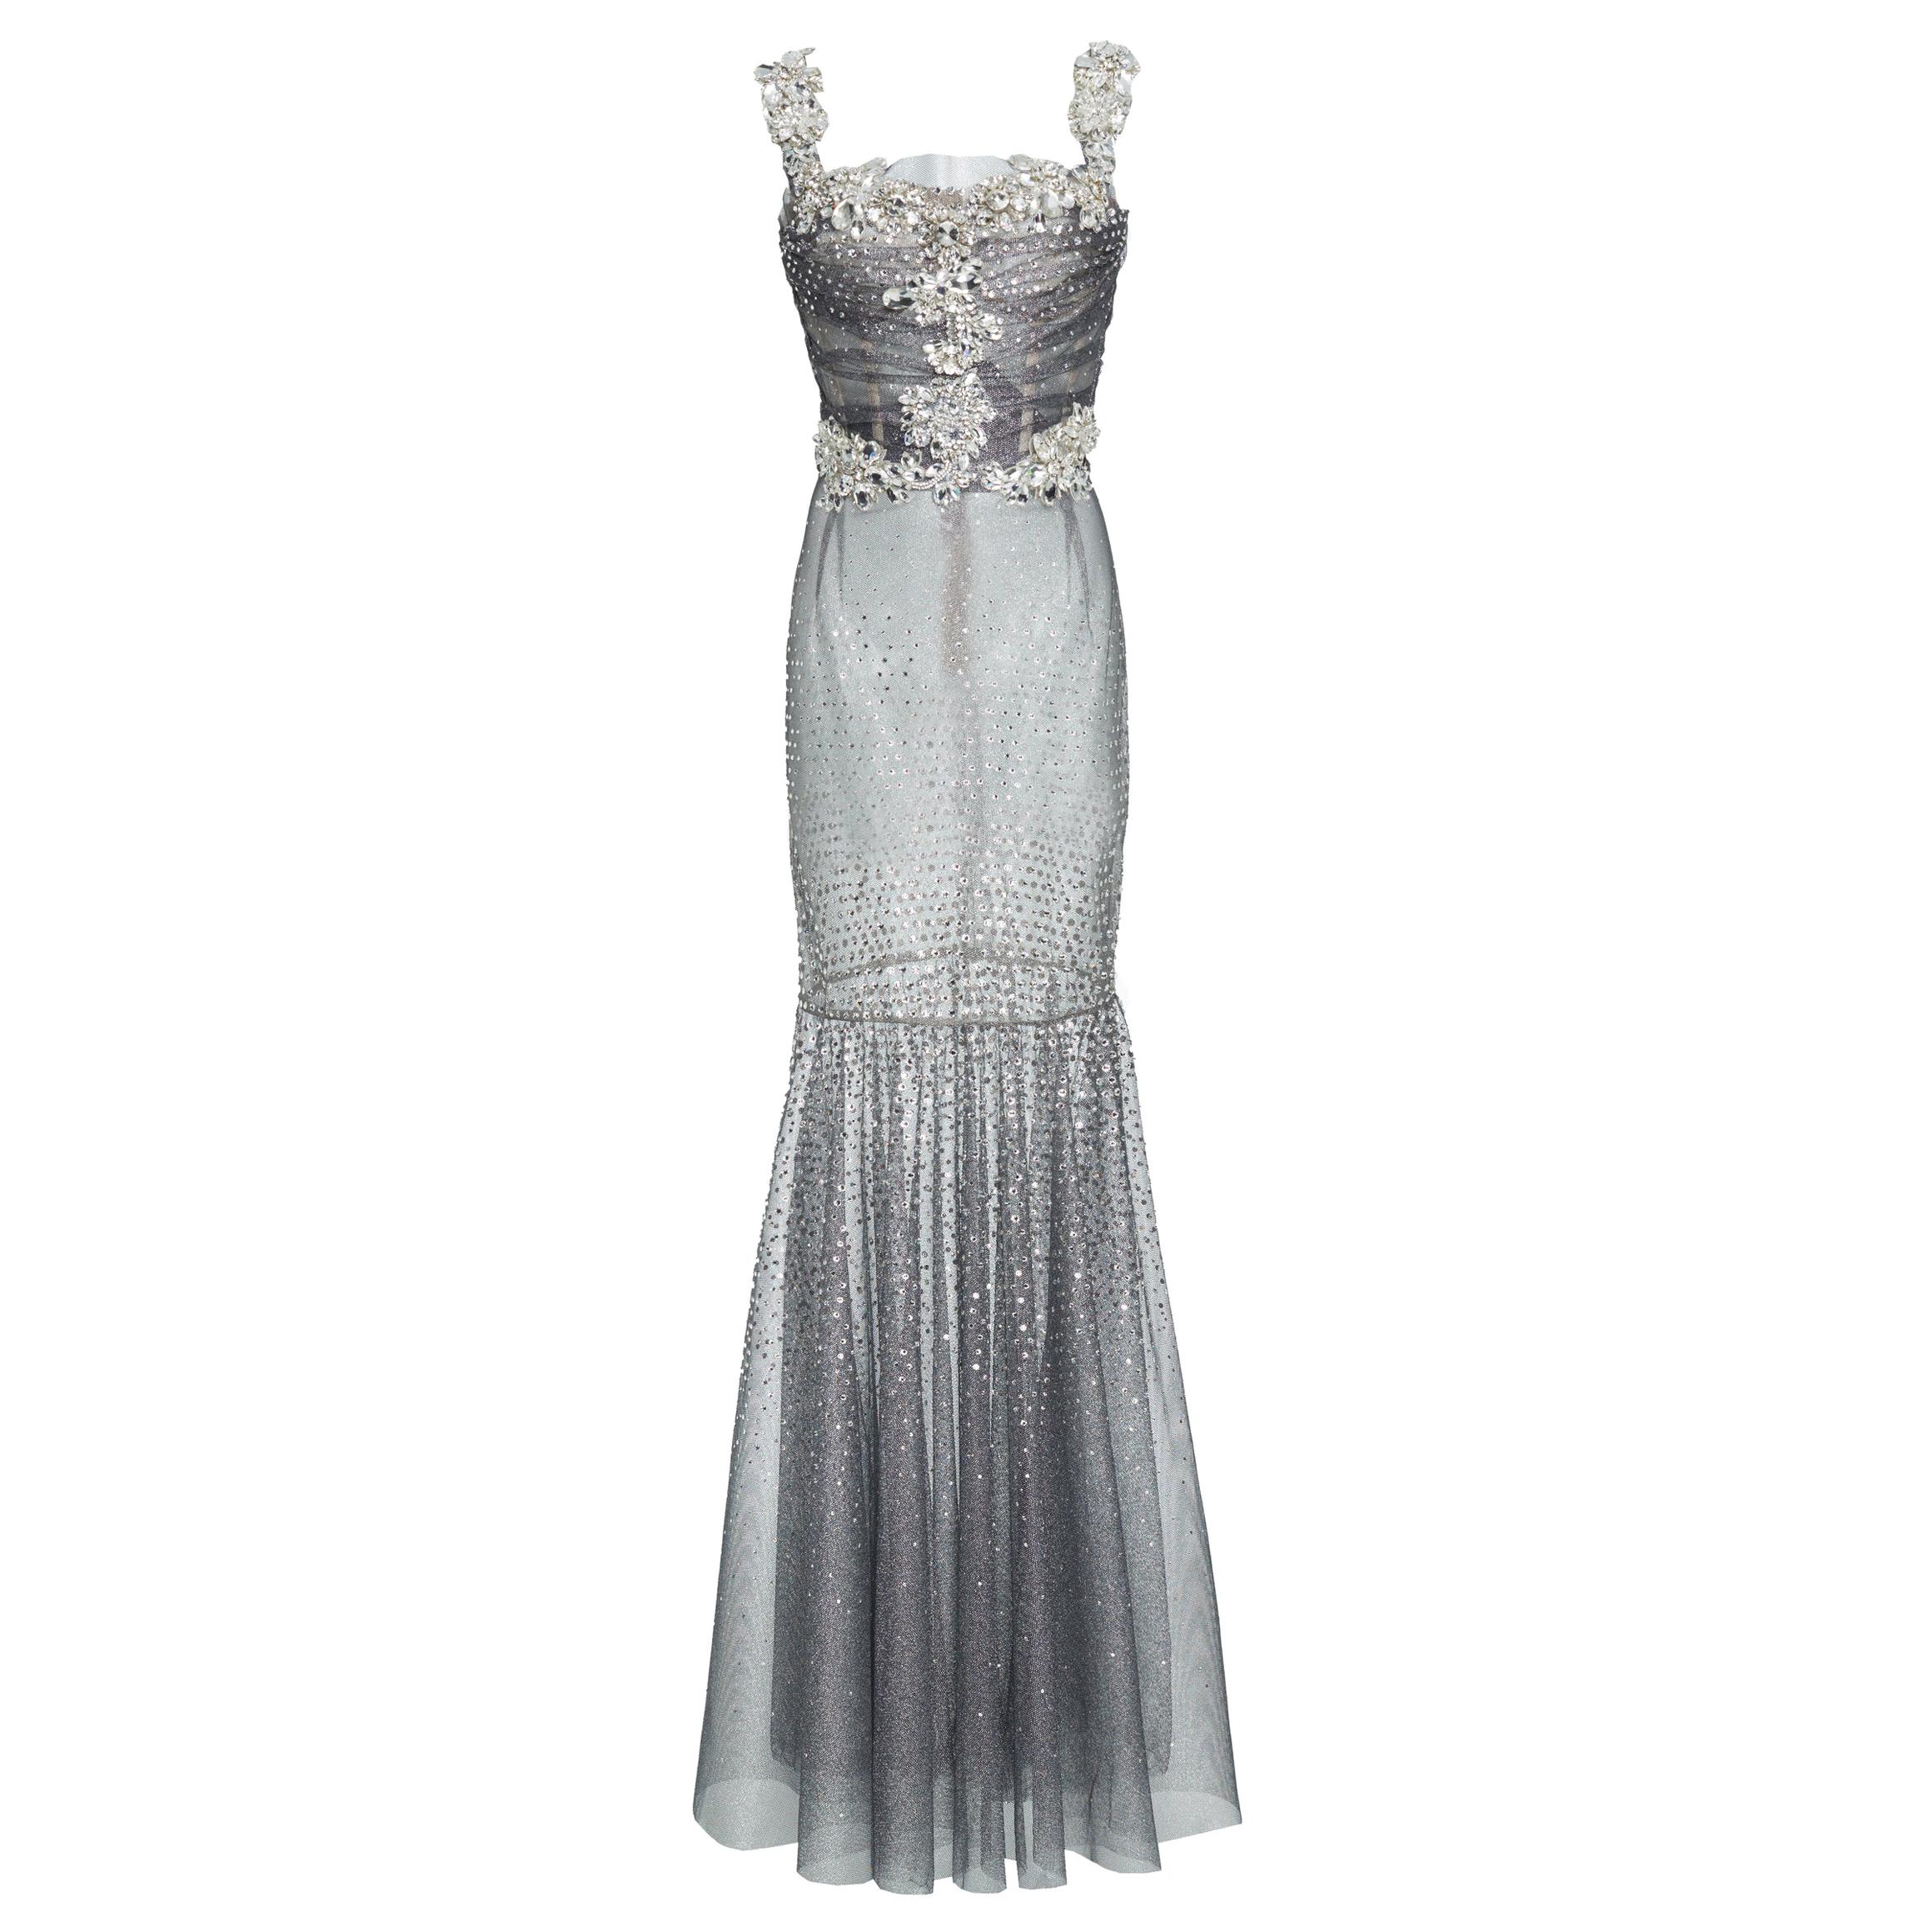 Dolce & Gabbana Runway Crystals Embellished Mermaid Dress  SZ38 Retailed $32, 000